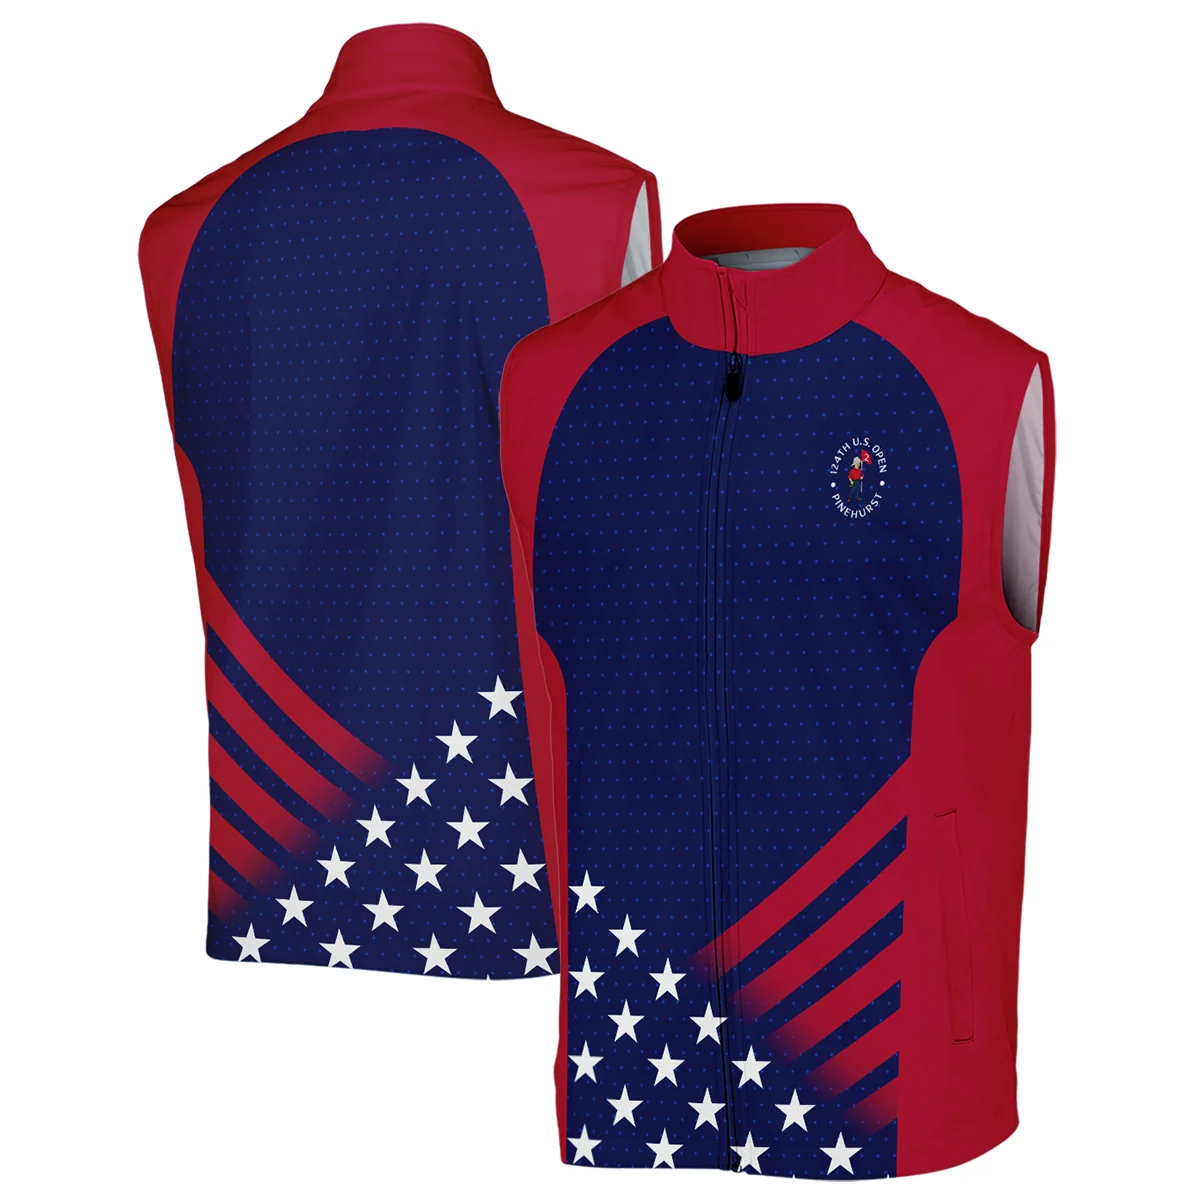 Rolex 124th U.S. Open Pinehurst Star White Dark Blue Red Background Vneck Polo Shirt Style Classic Polo Shirt For Men